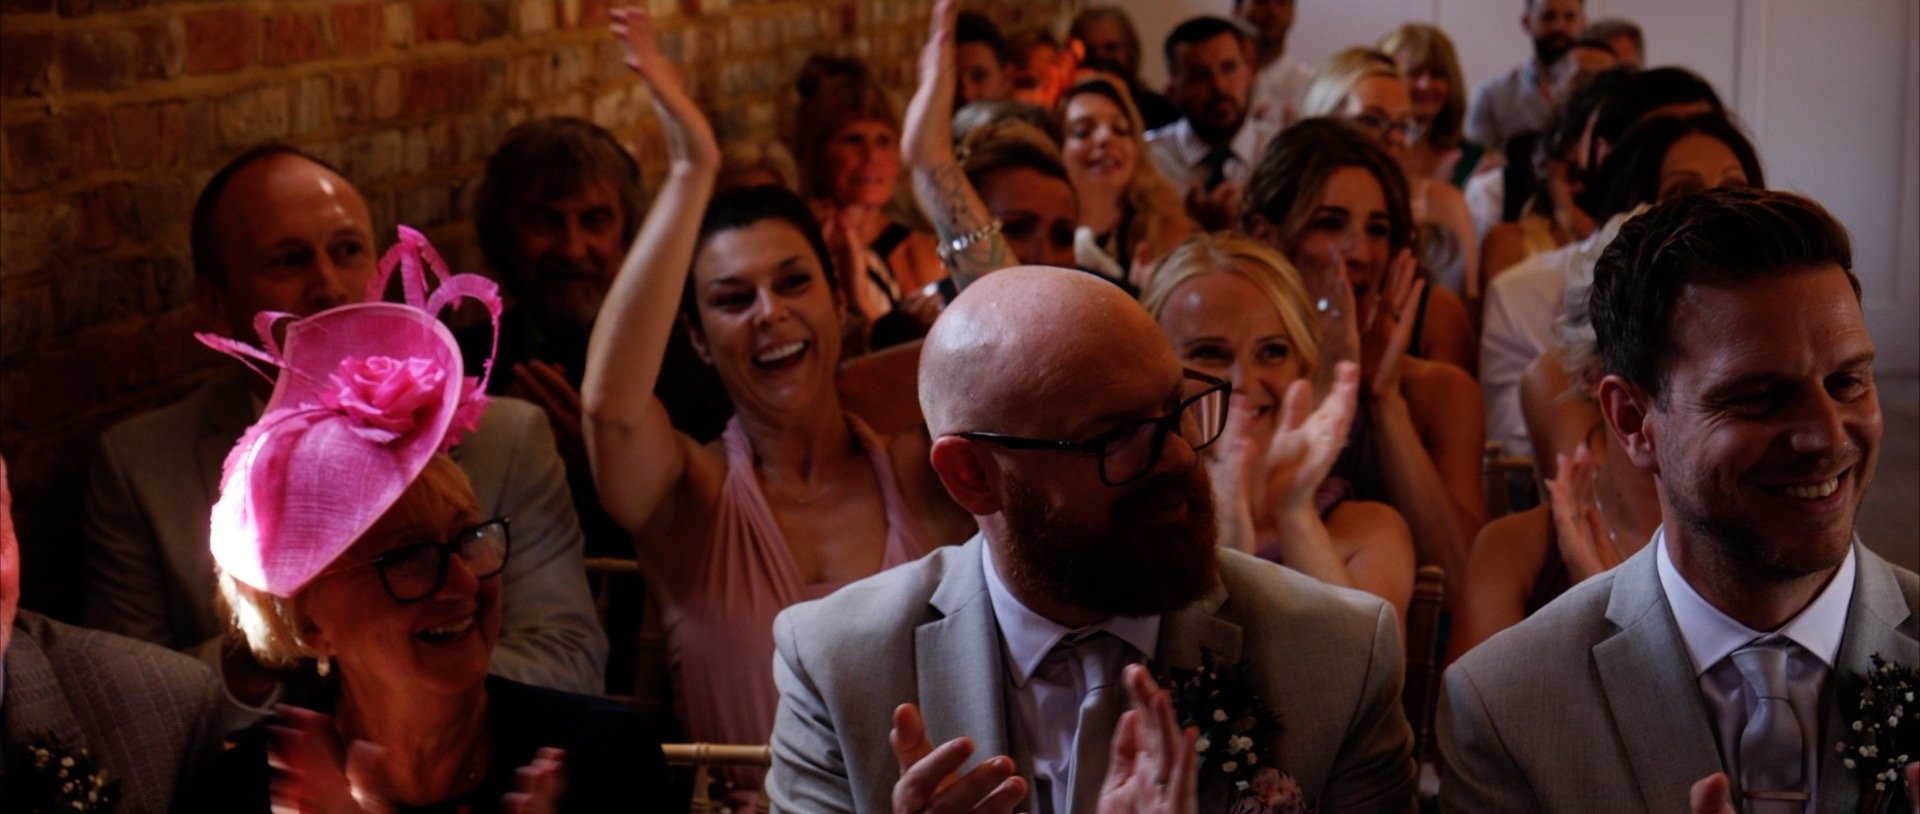 Just married celebrations video at Apton Hall Essex.jpg